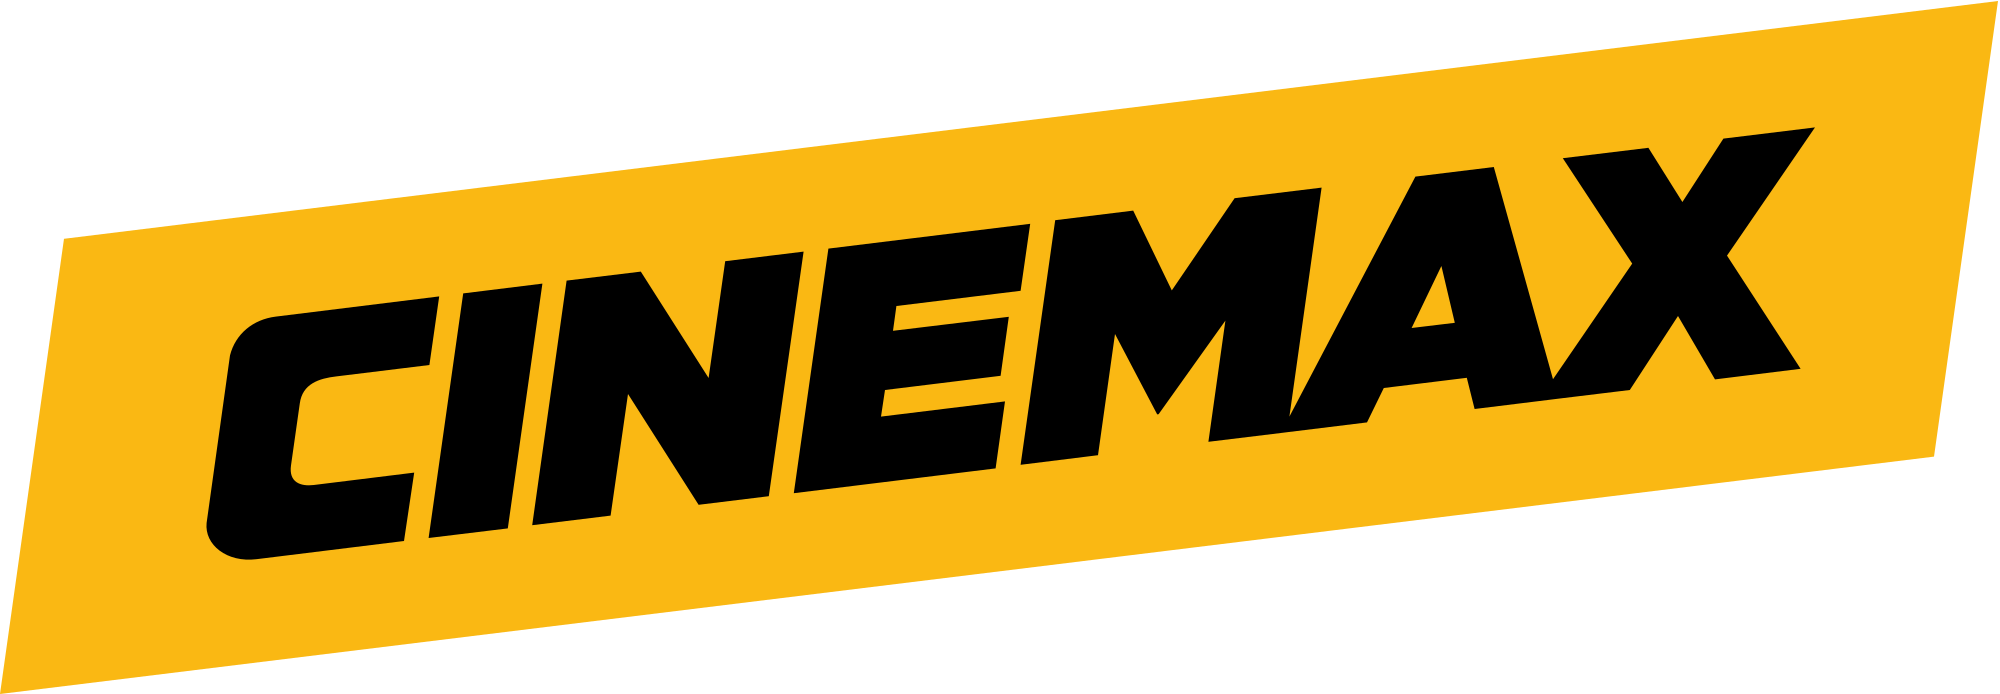 Cinemax - network